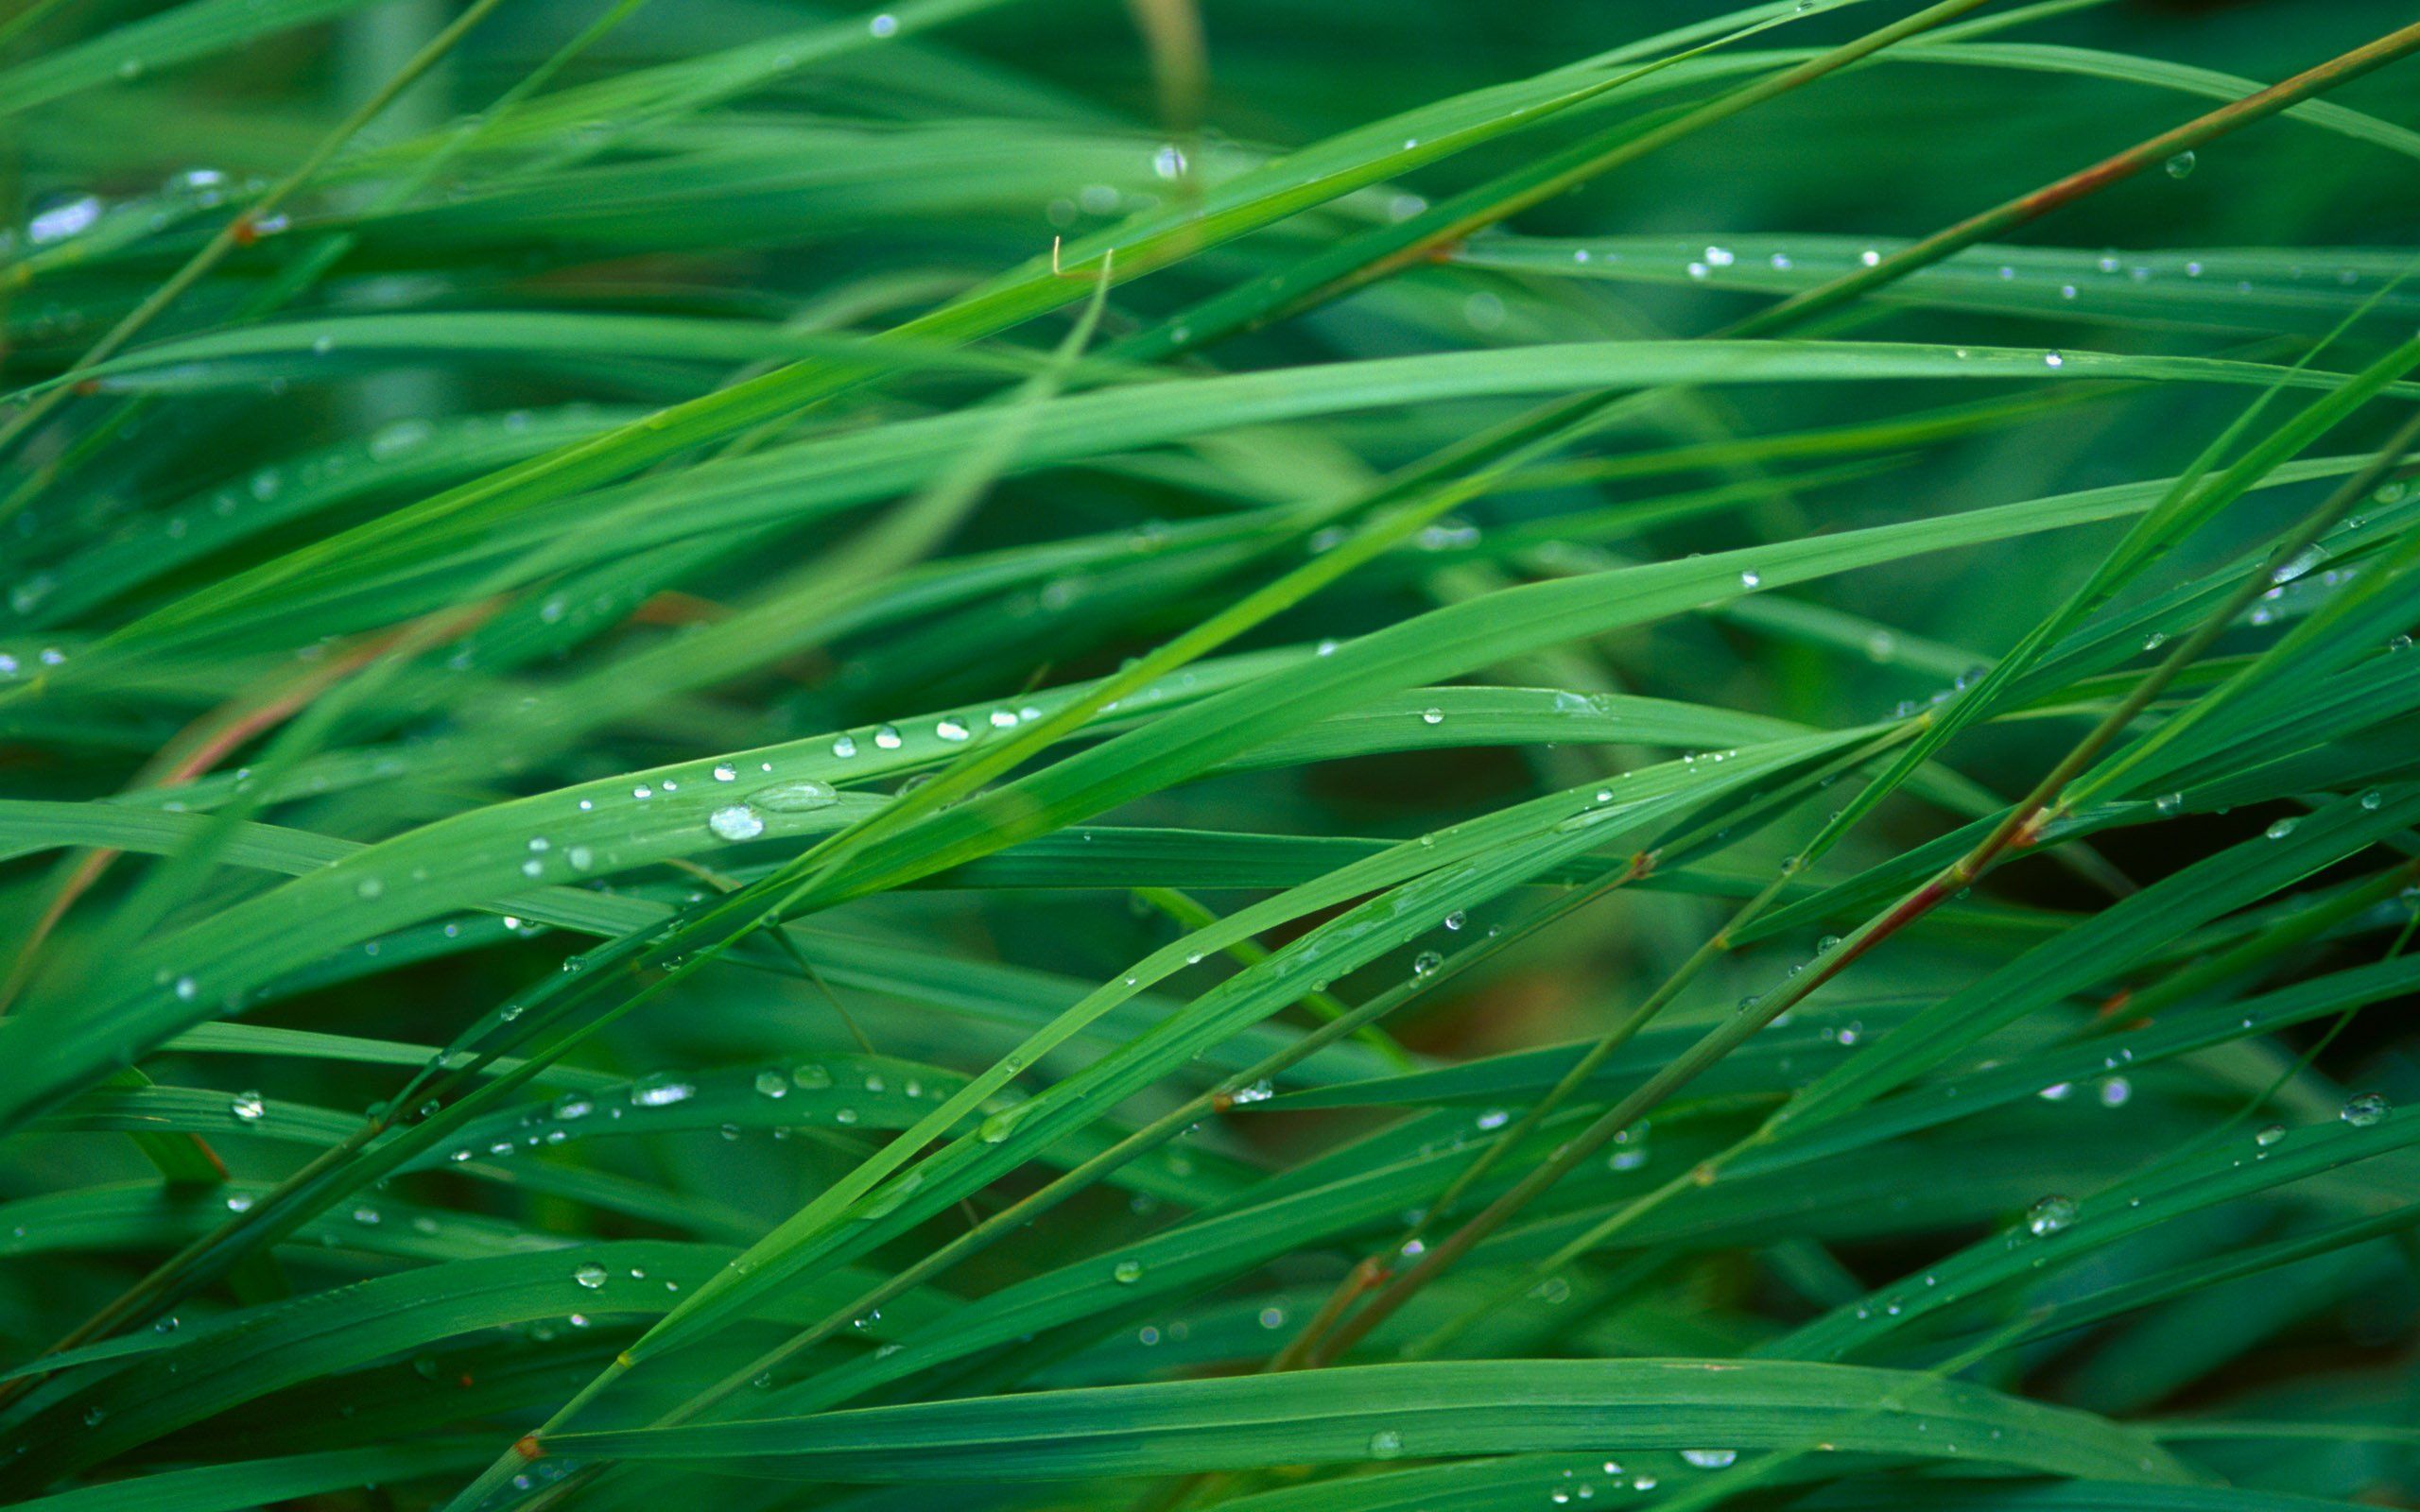 Dew on Grass: Mac OS X 10.5 Leopard Wallpaper | Flickr - Photo ...